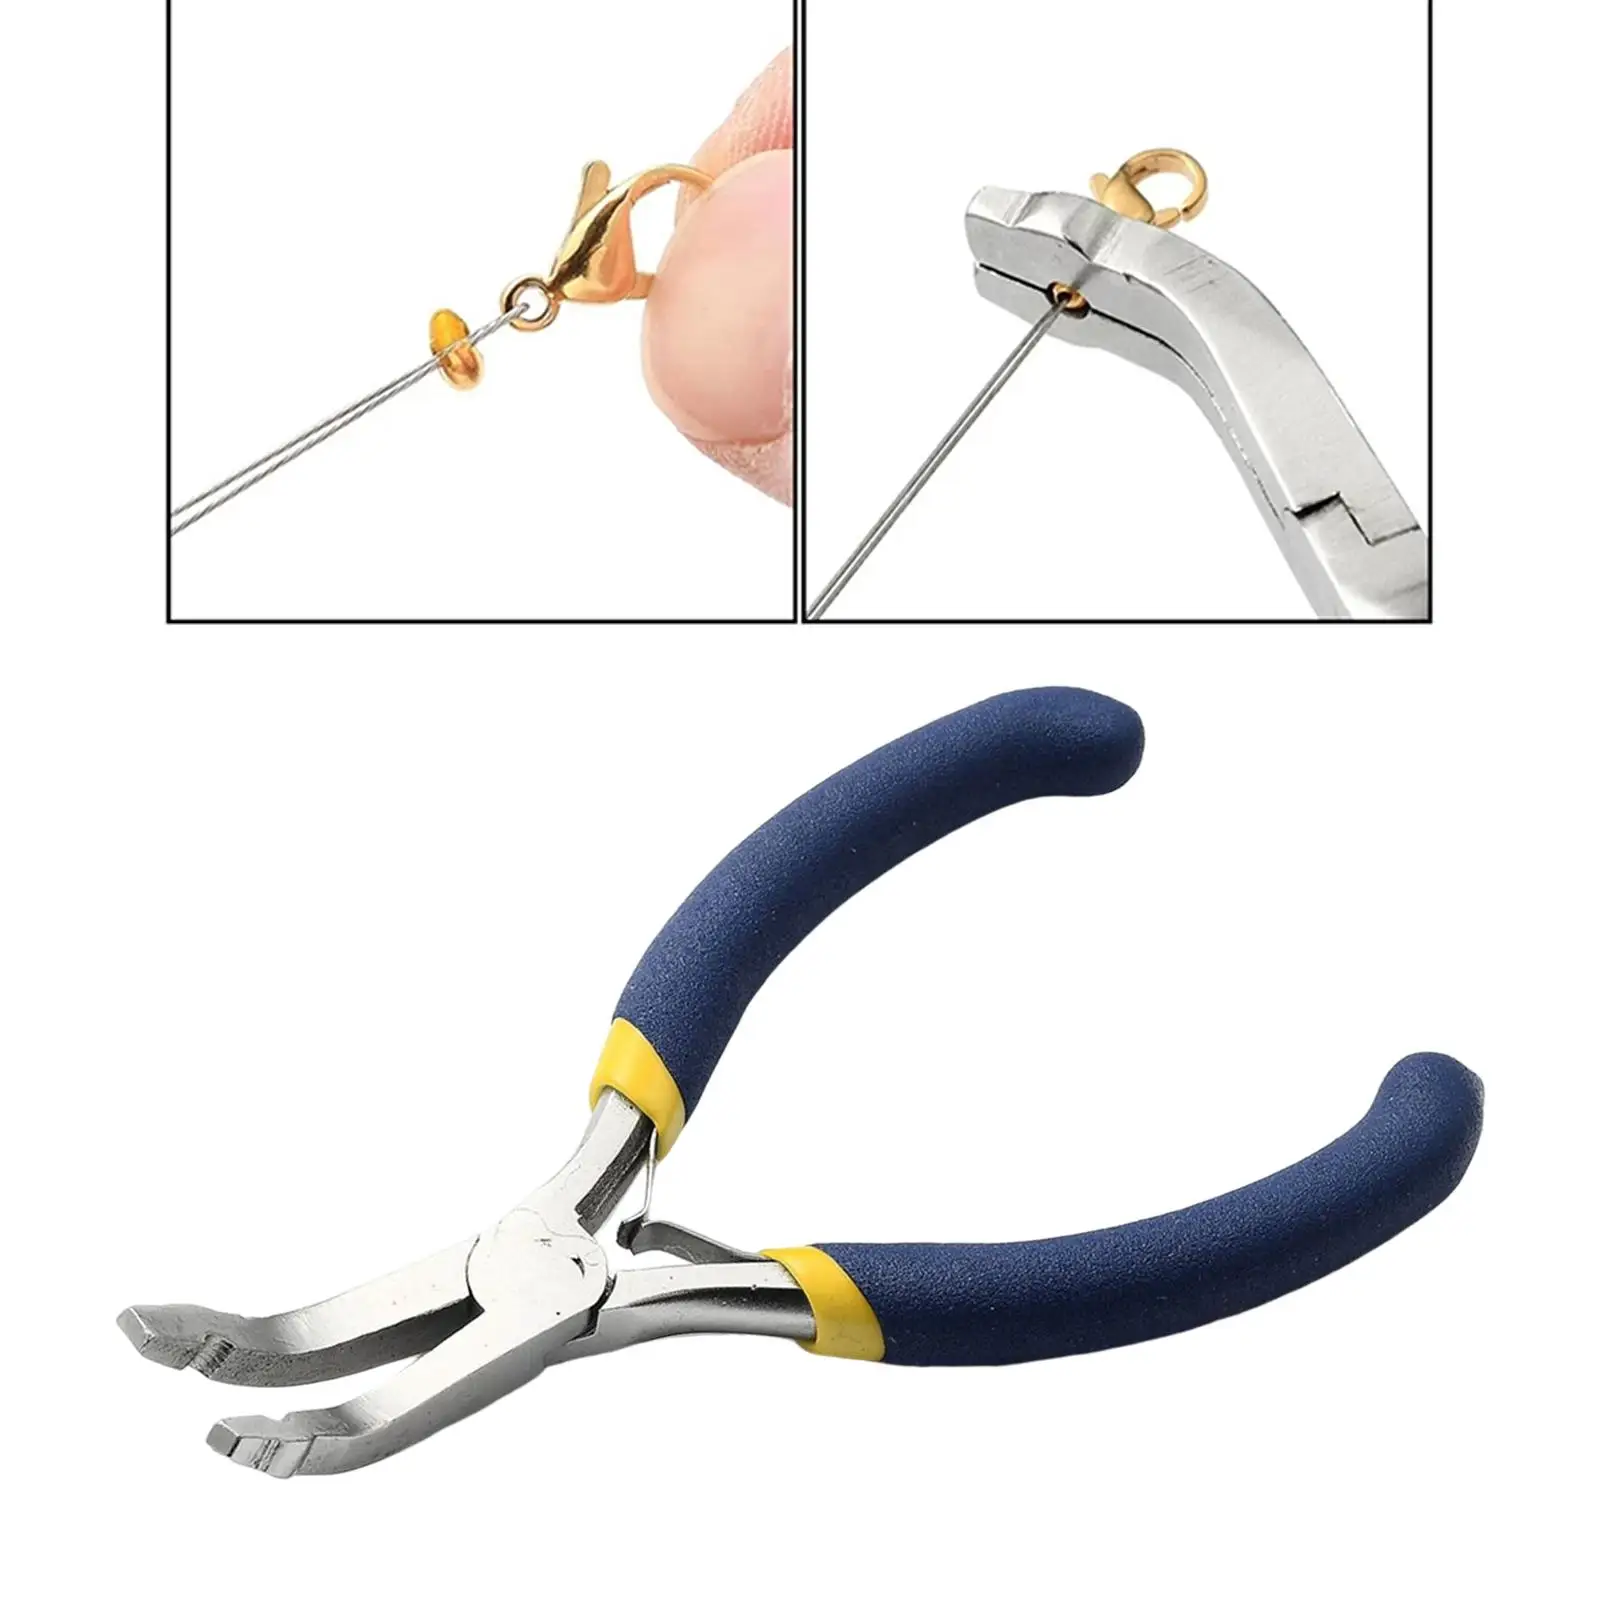 Jewelry Crimp Plier Bead Crimping Plier for Jewelry Repair DIY Craft Beading Jewelry Making Tool